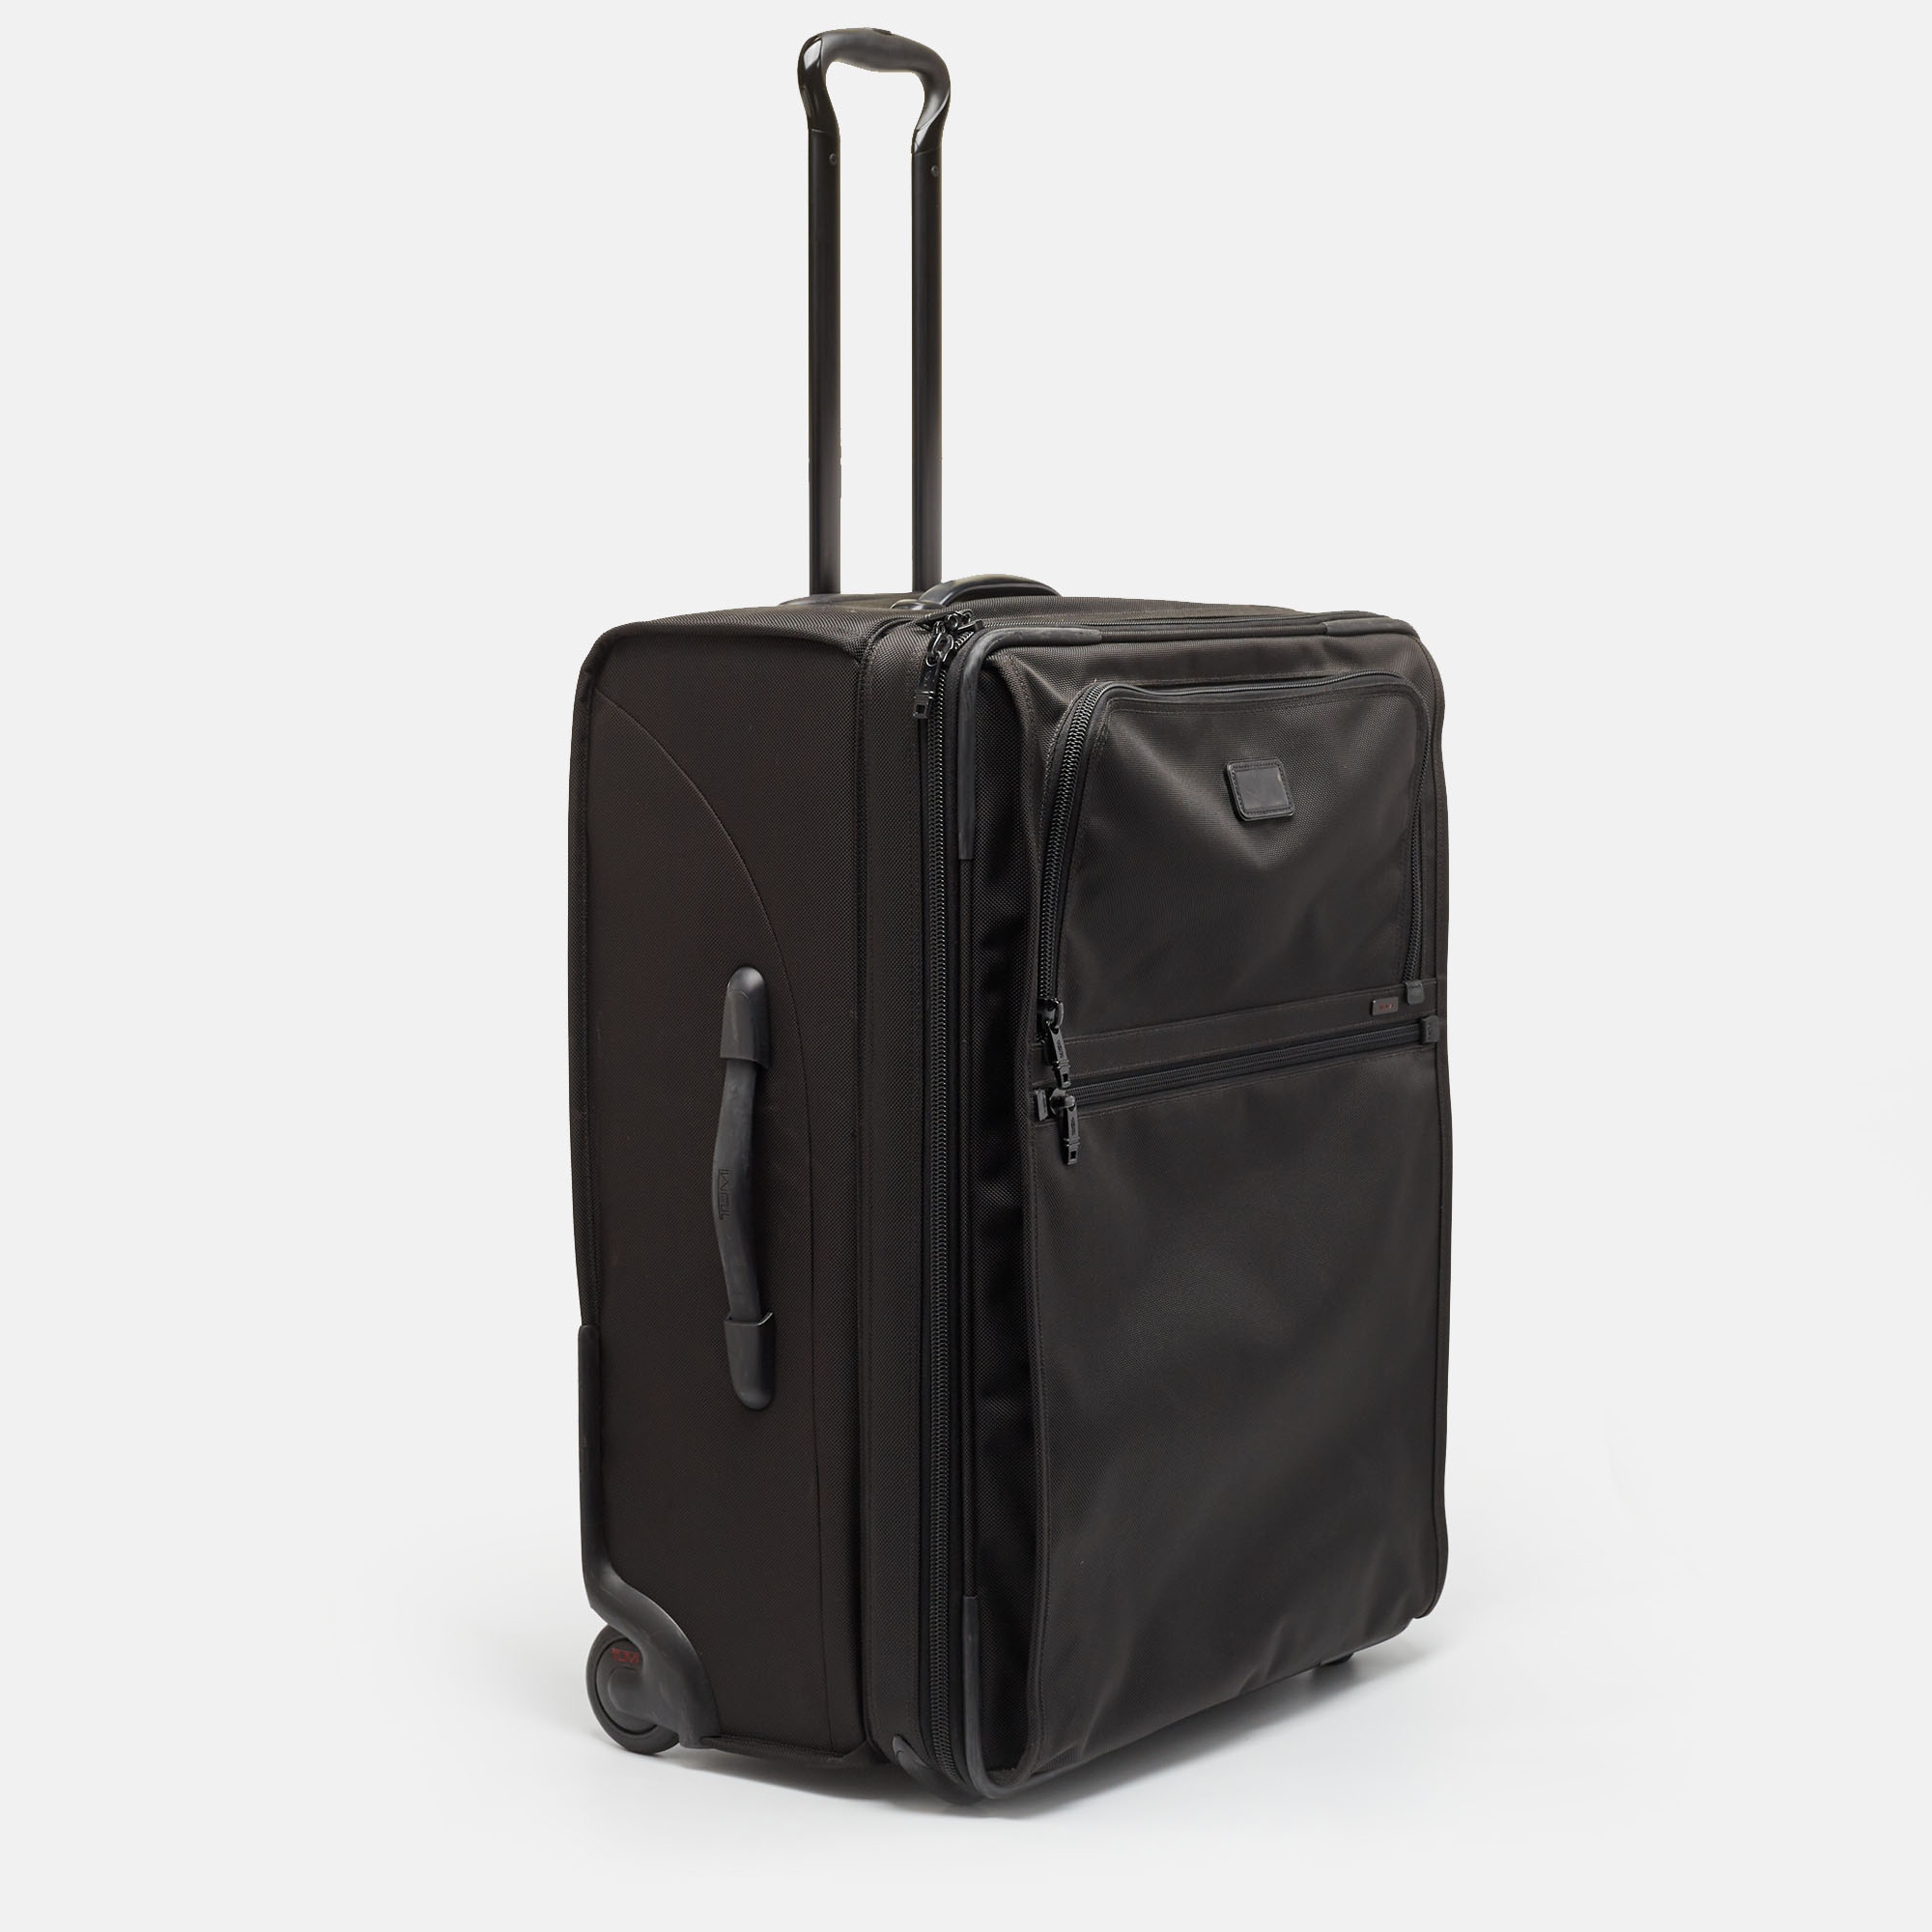 TUMI Black Ballistic Nylon 2 Wheeled Expandable Trip Luggage